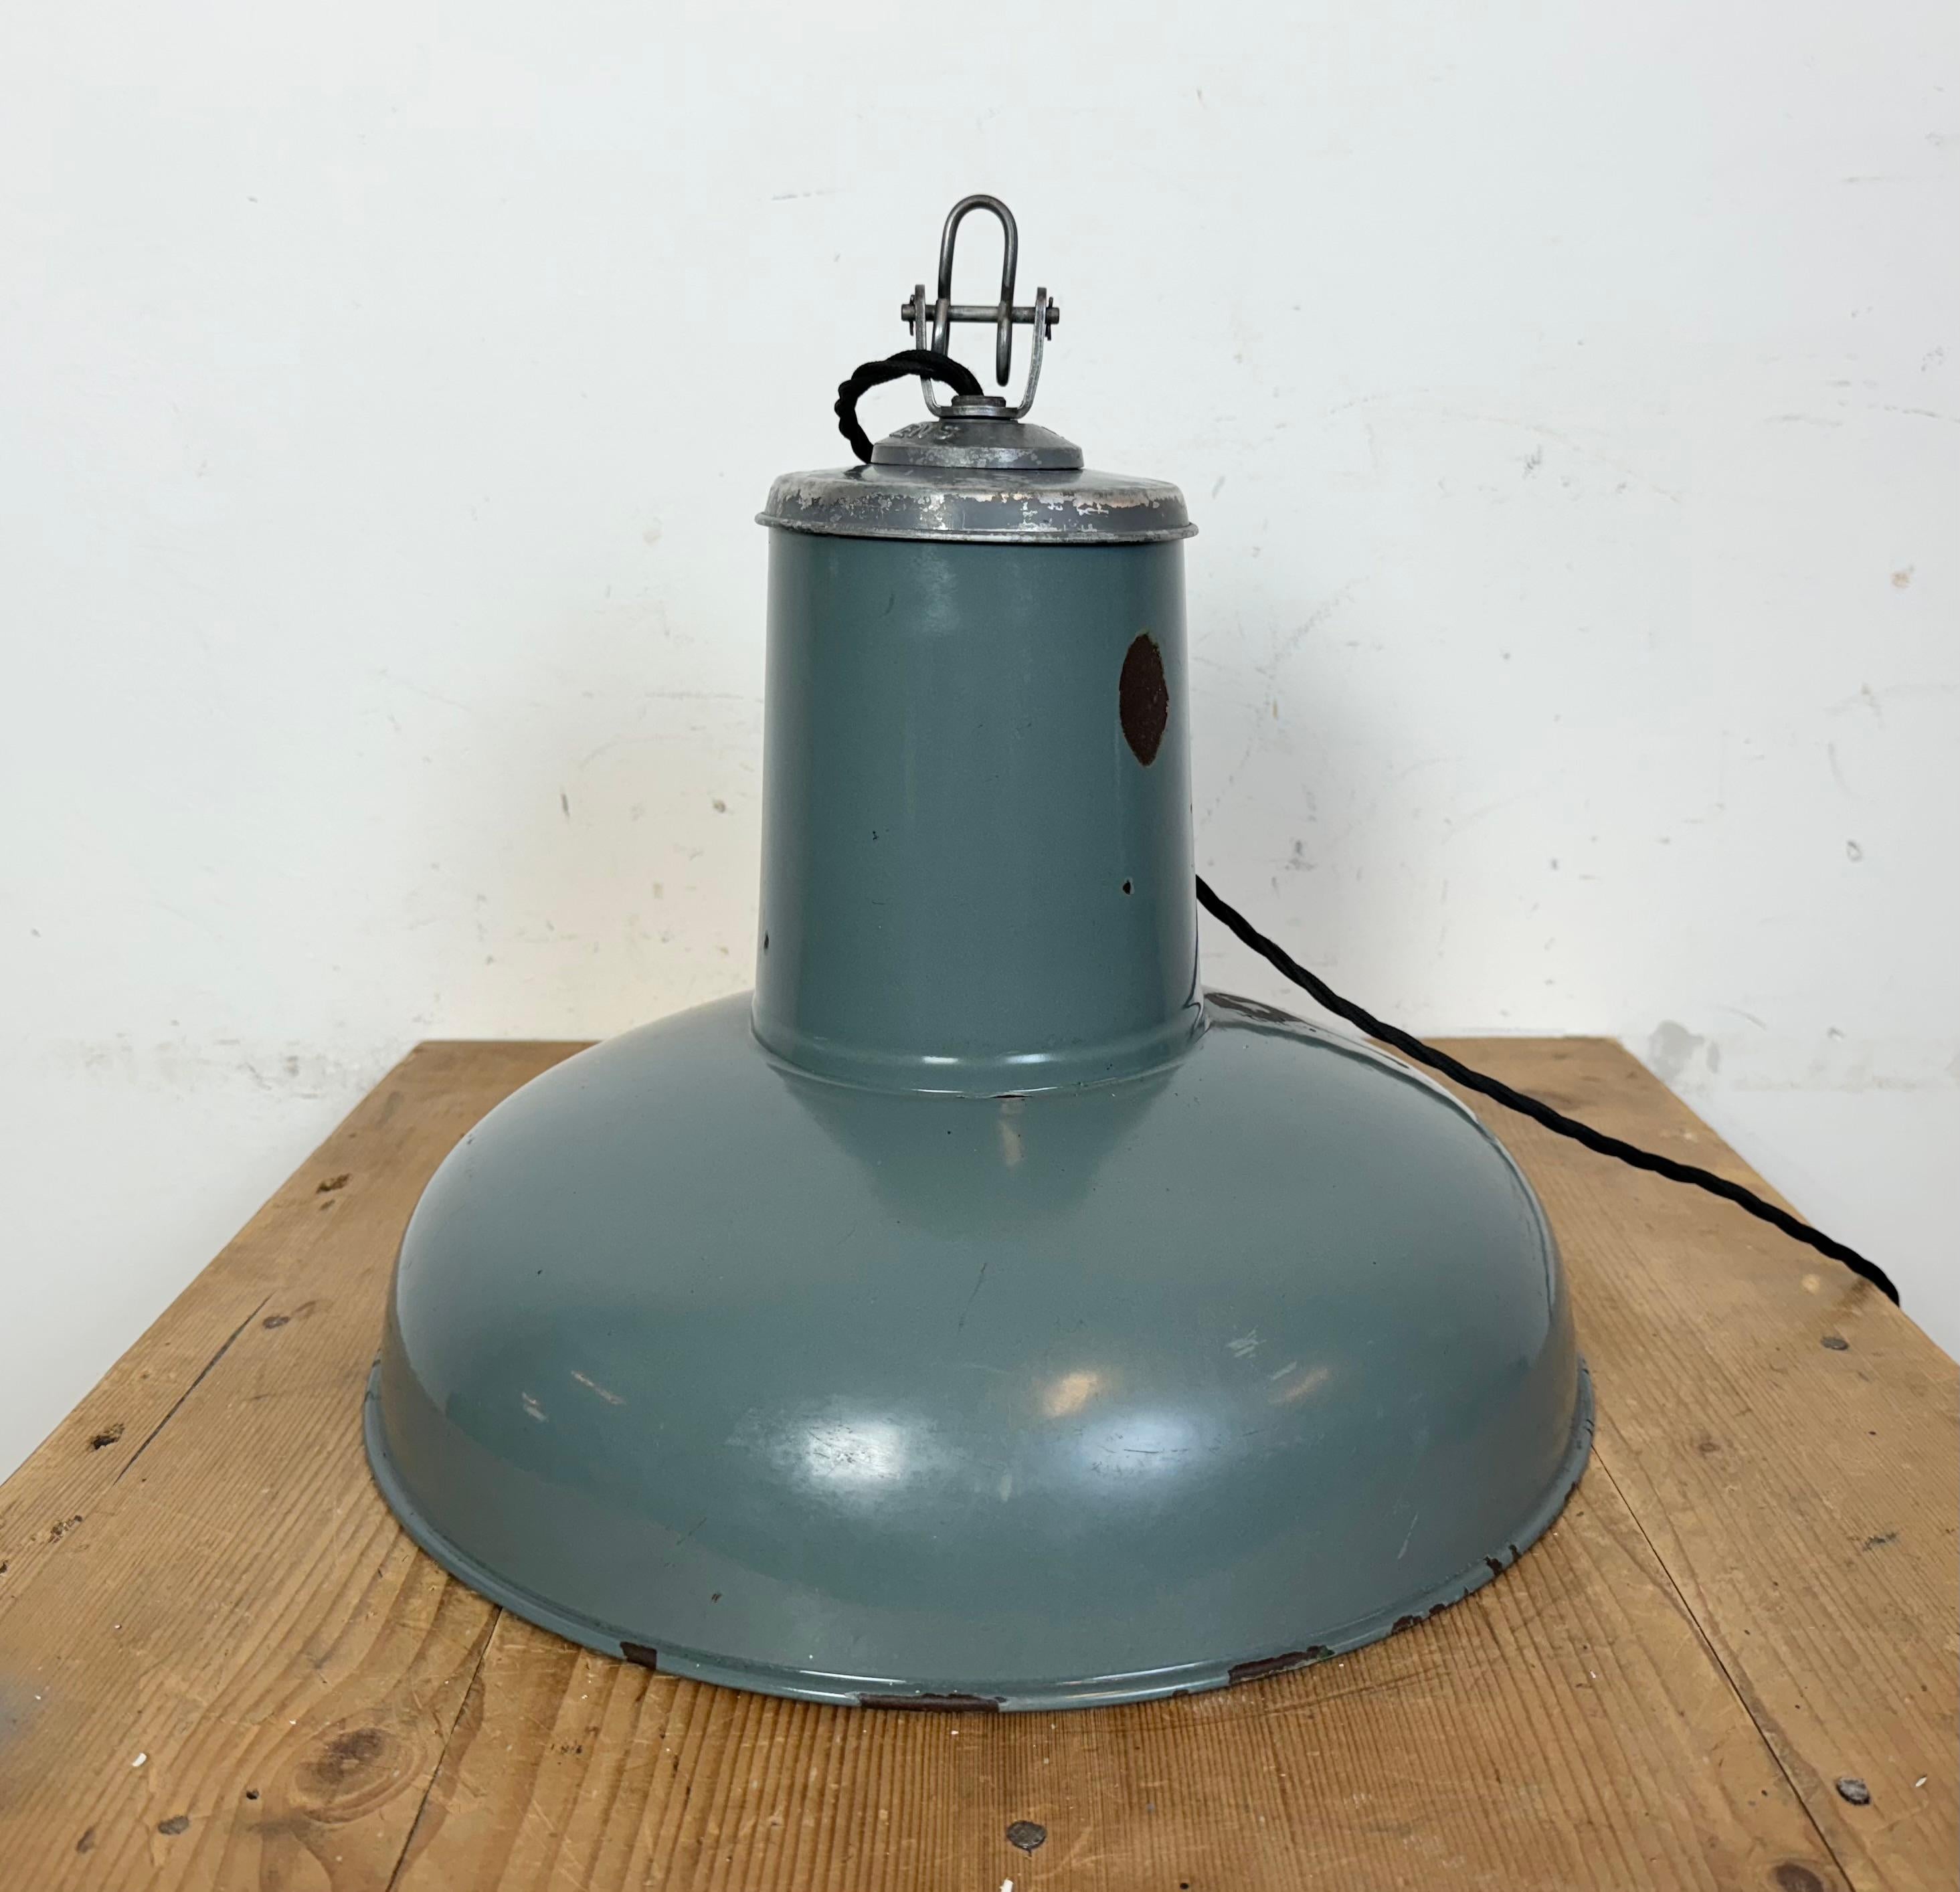 Industrial Grey Enamel Pendant Lamp from Siemens, 1930s For Sale 5